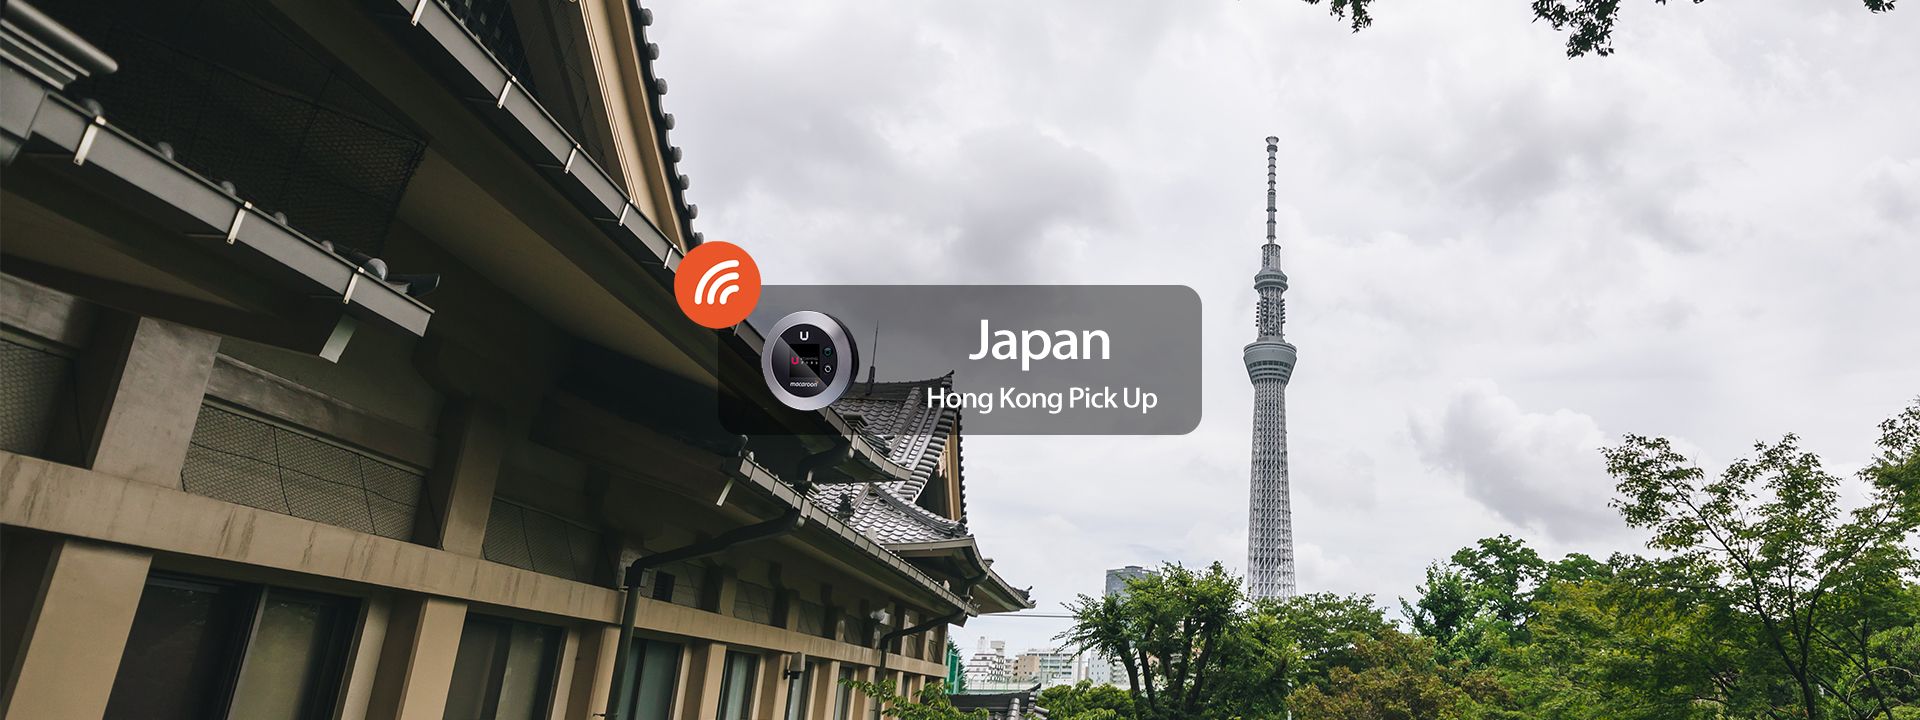 Imagen del tour: [SALE] 4G WiFi (Hong Kong Pick Up) for Japan from Uroaming